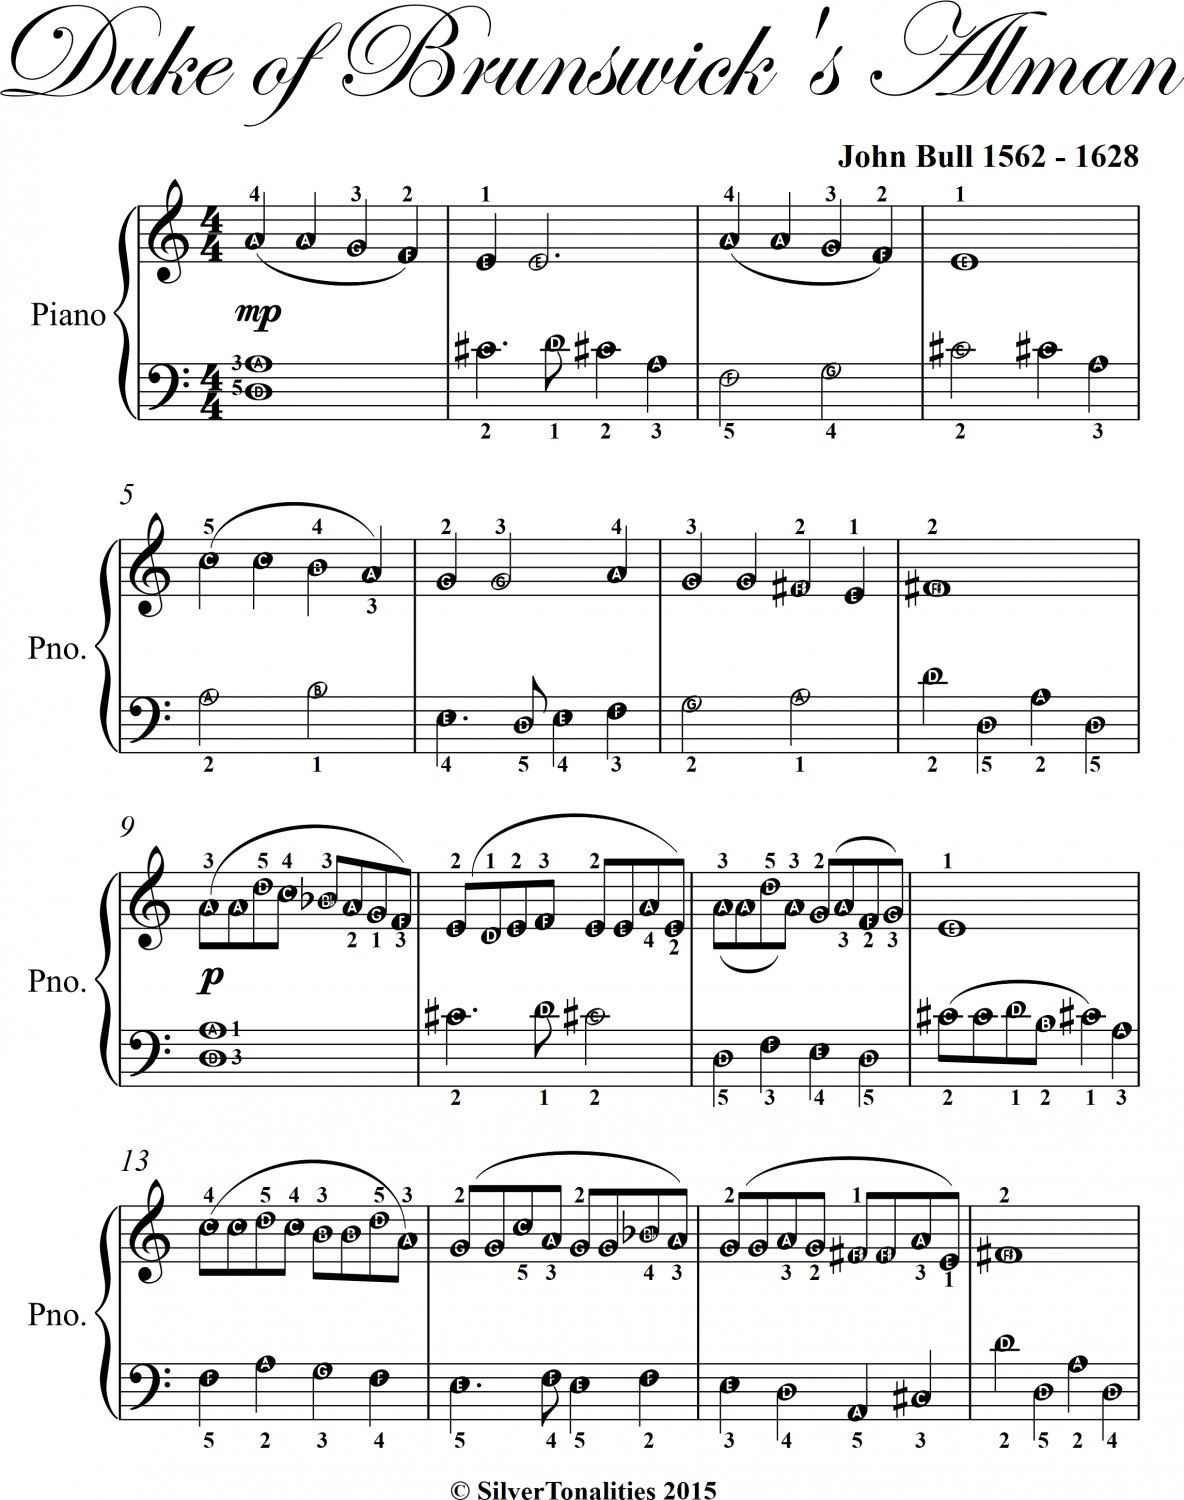 Duke of Brunswick's Alman Easy Piano Sheet Music